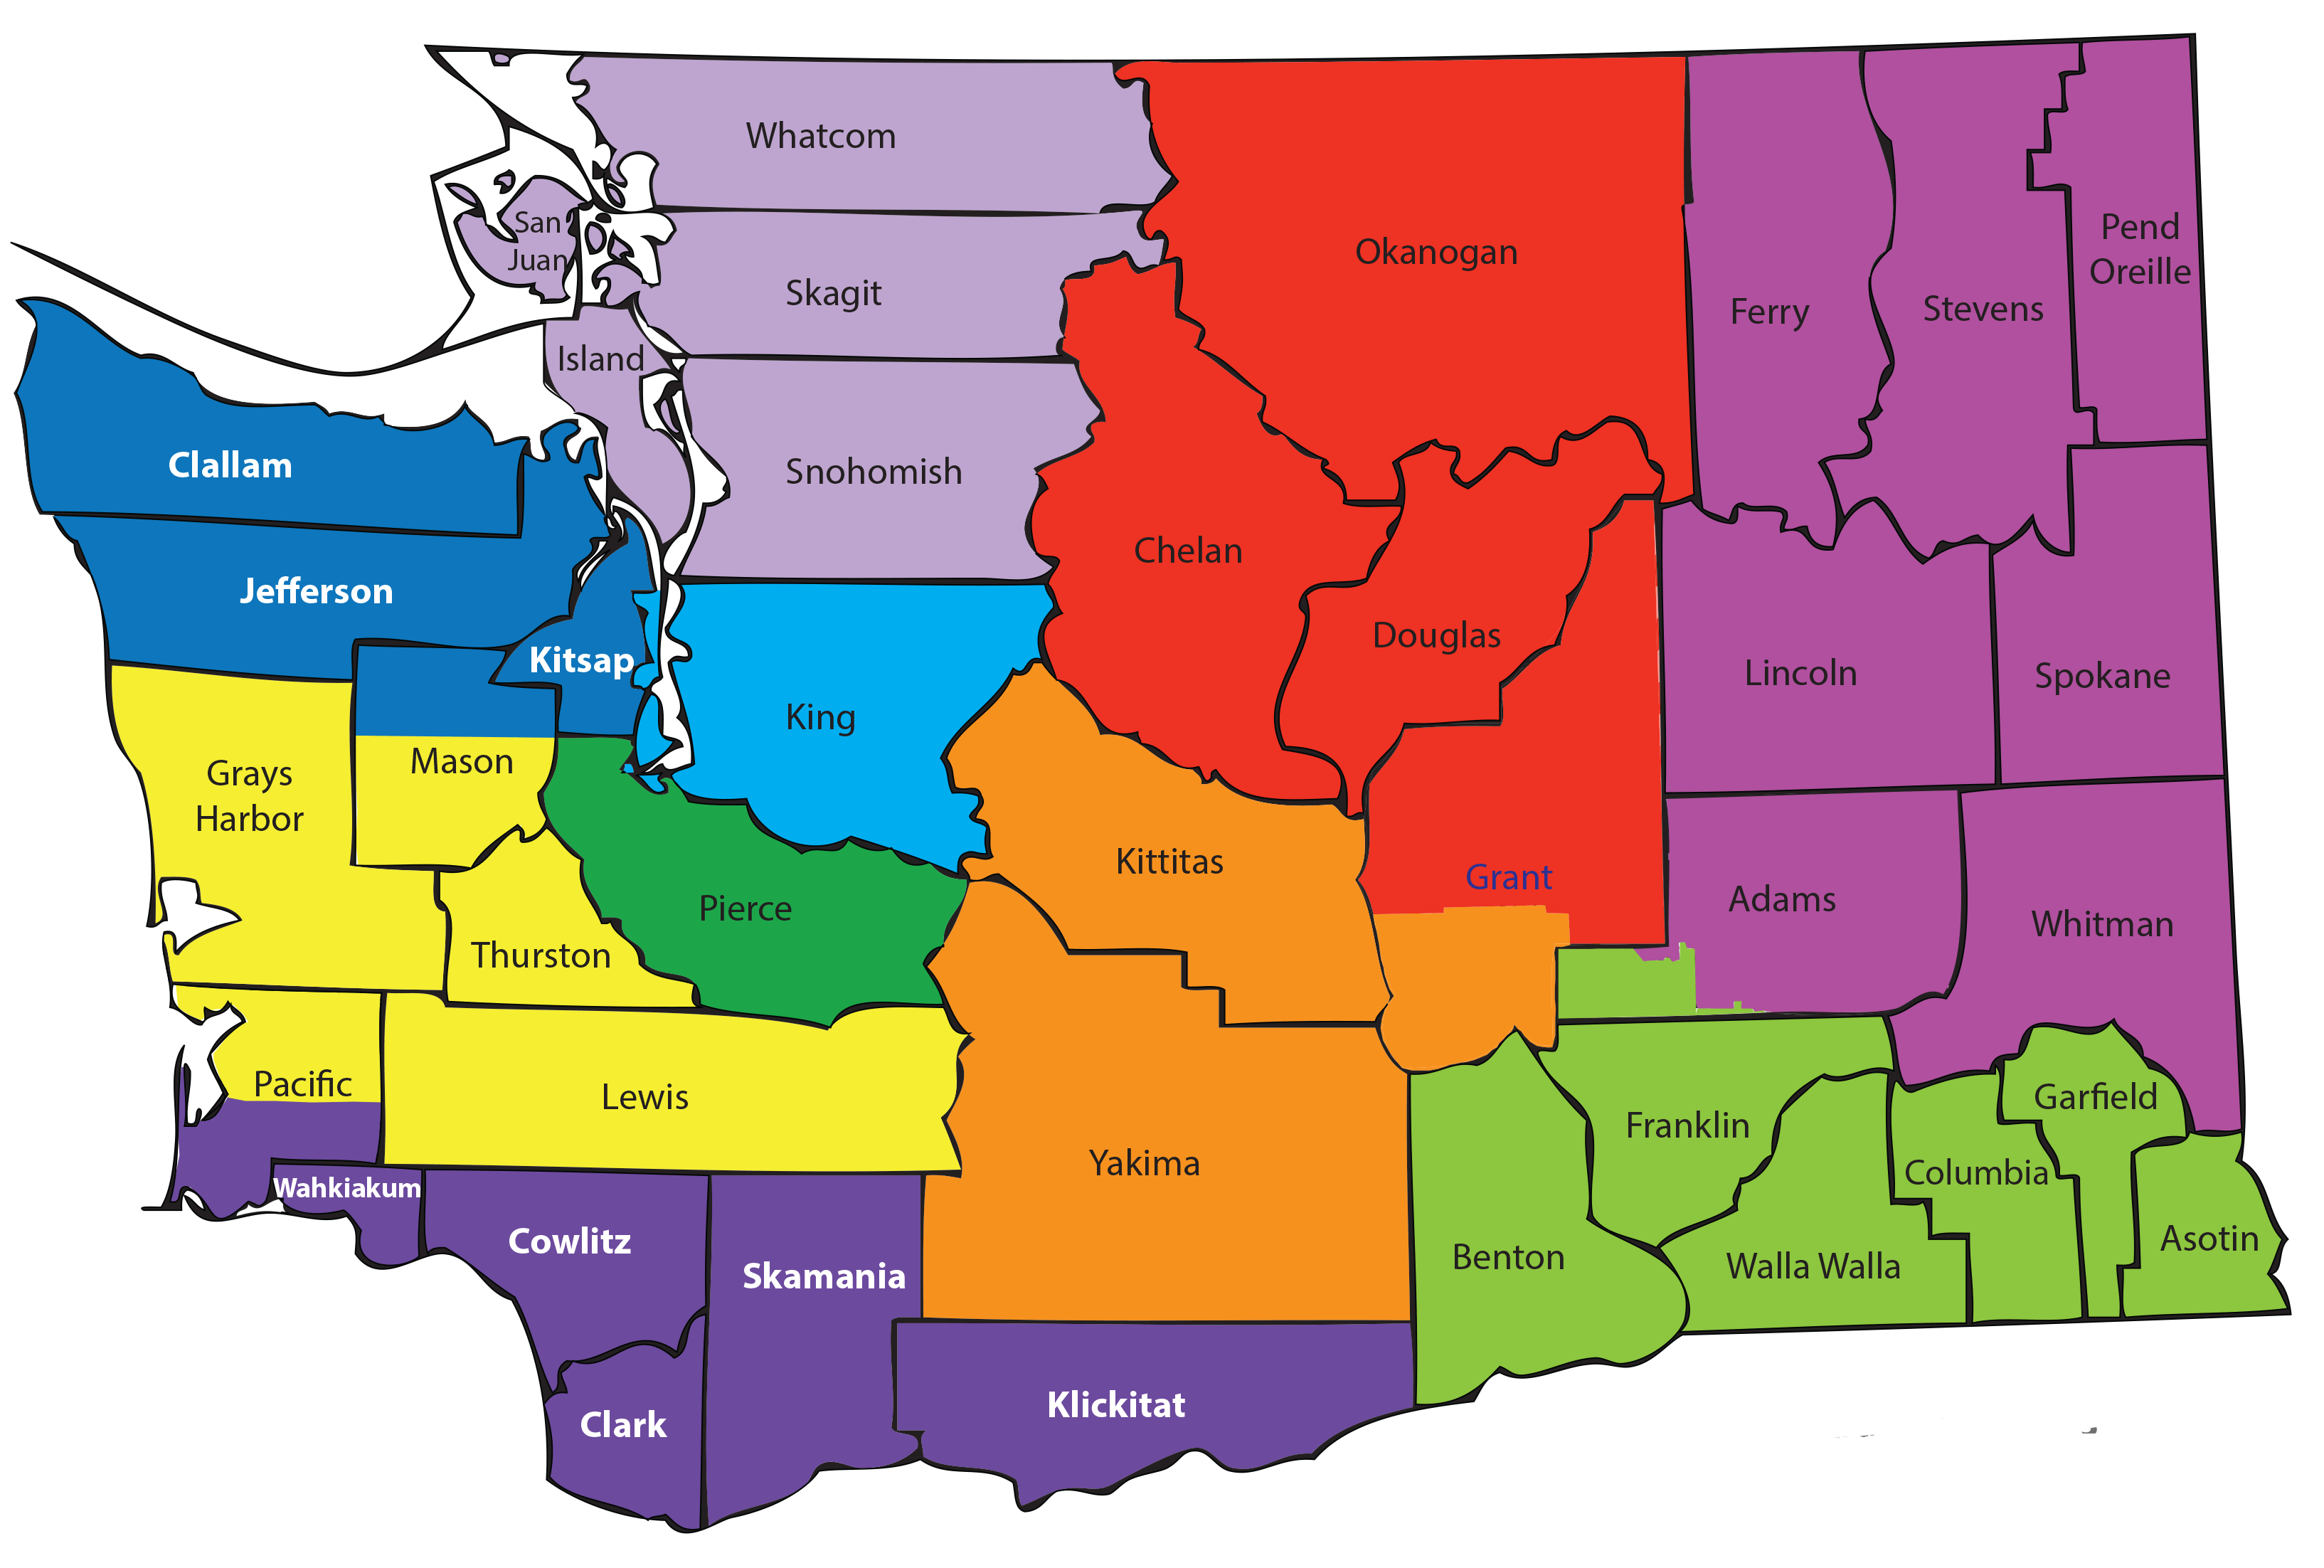 Coalition map